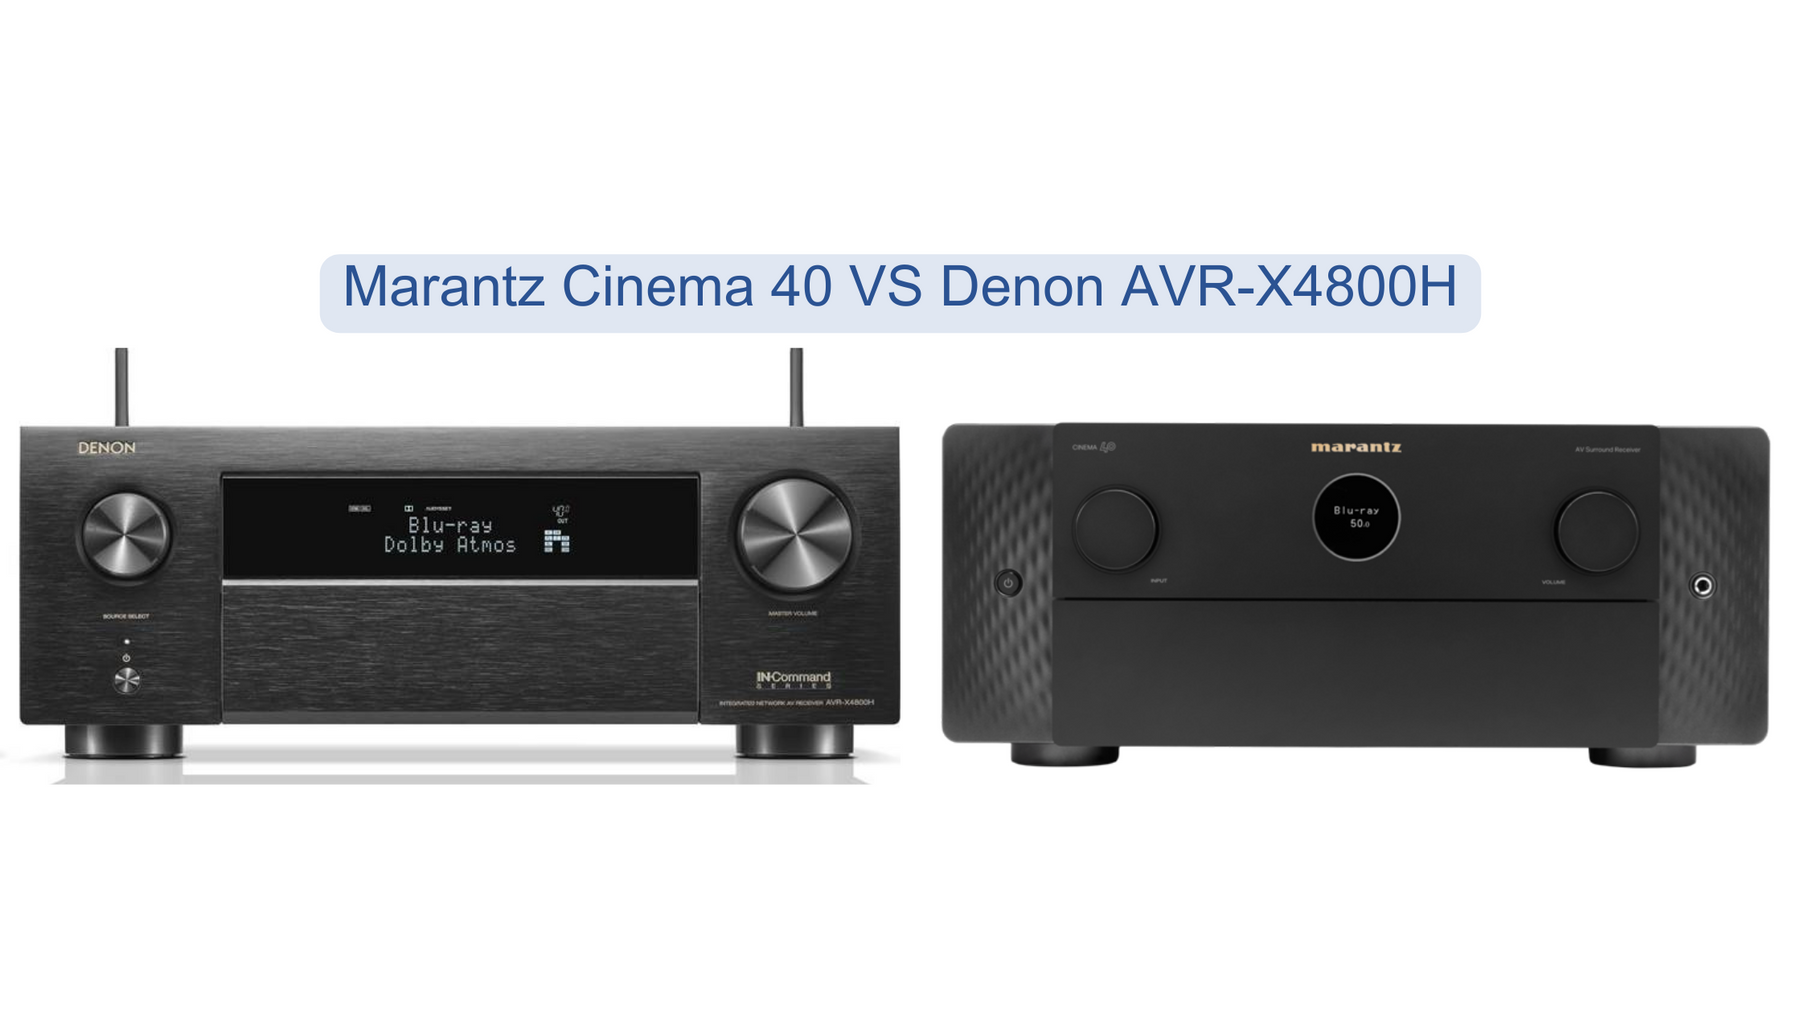 Marantz Cinema 40 vs. Denon AVR-X4800H